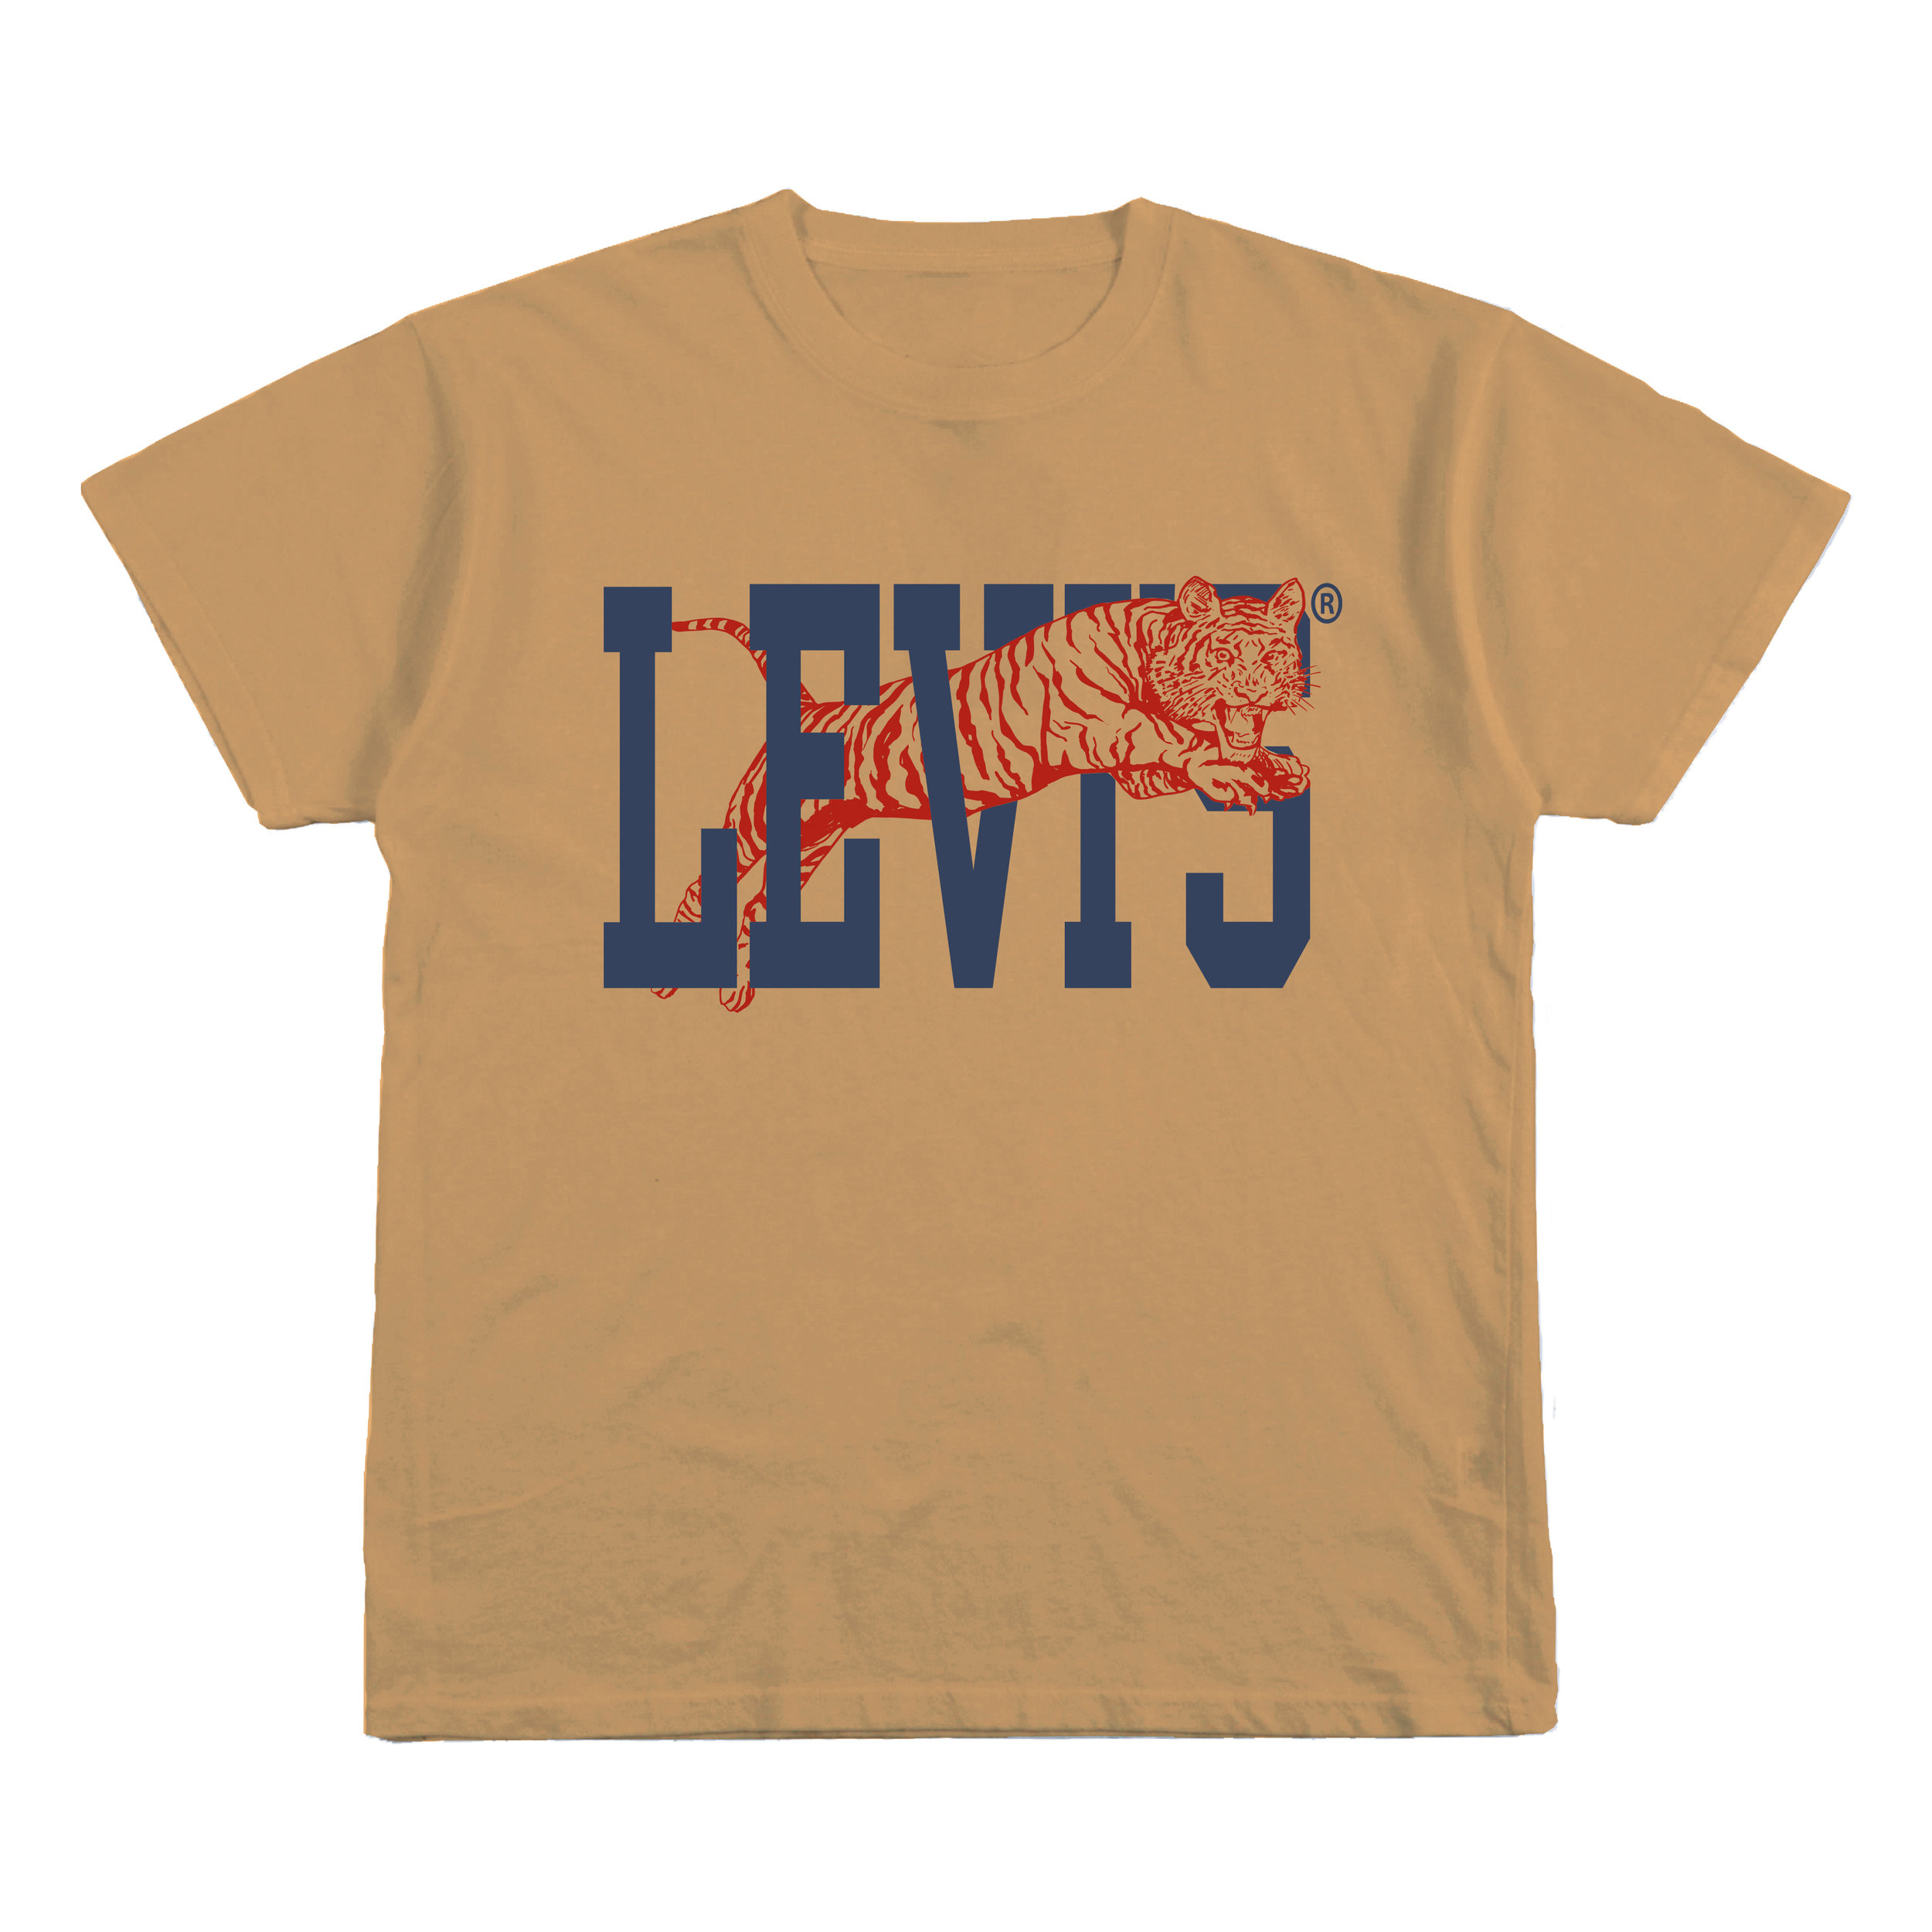 levi's tiger shirt